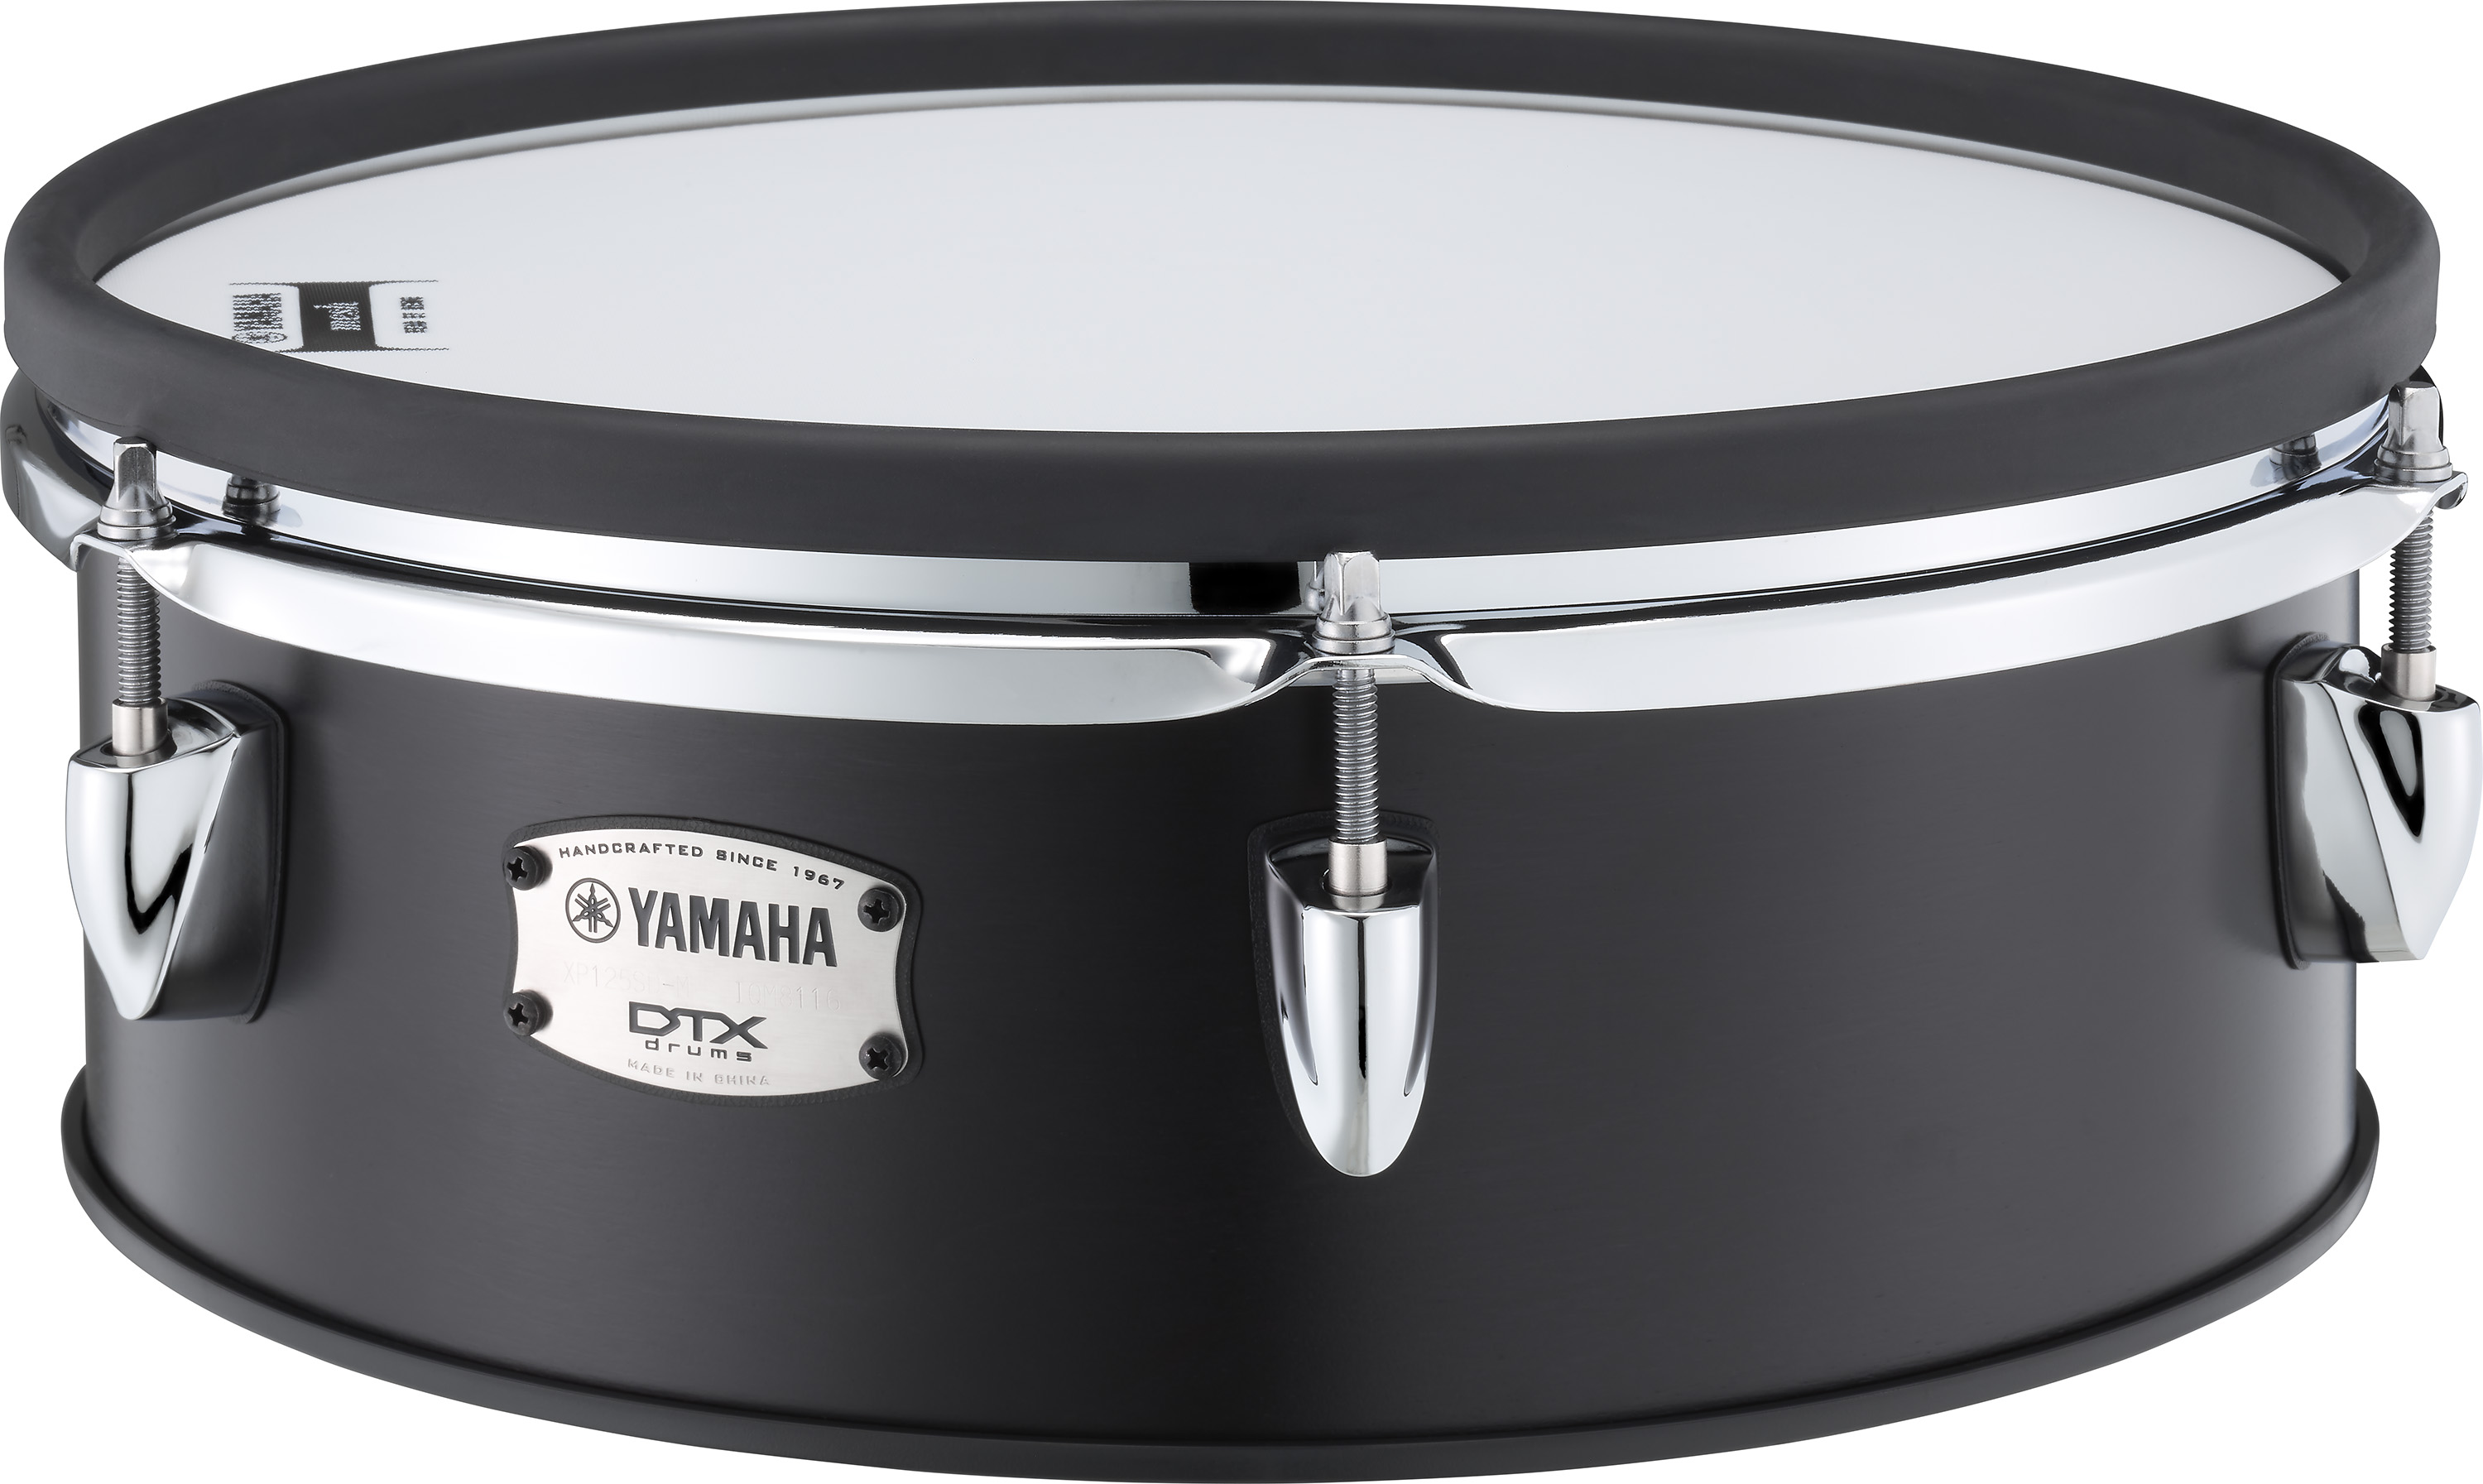 Yamaha Dtx8-km Electronic Drum Kit Mesh Black Forrest - Electronic drum kit & set - Variation 1